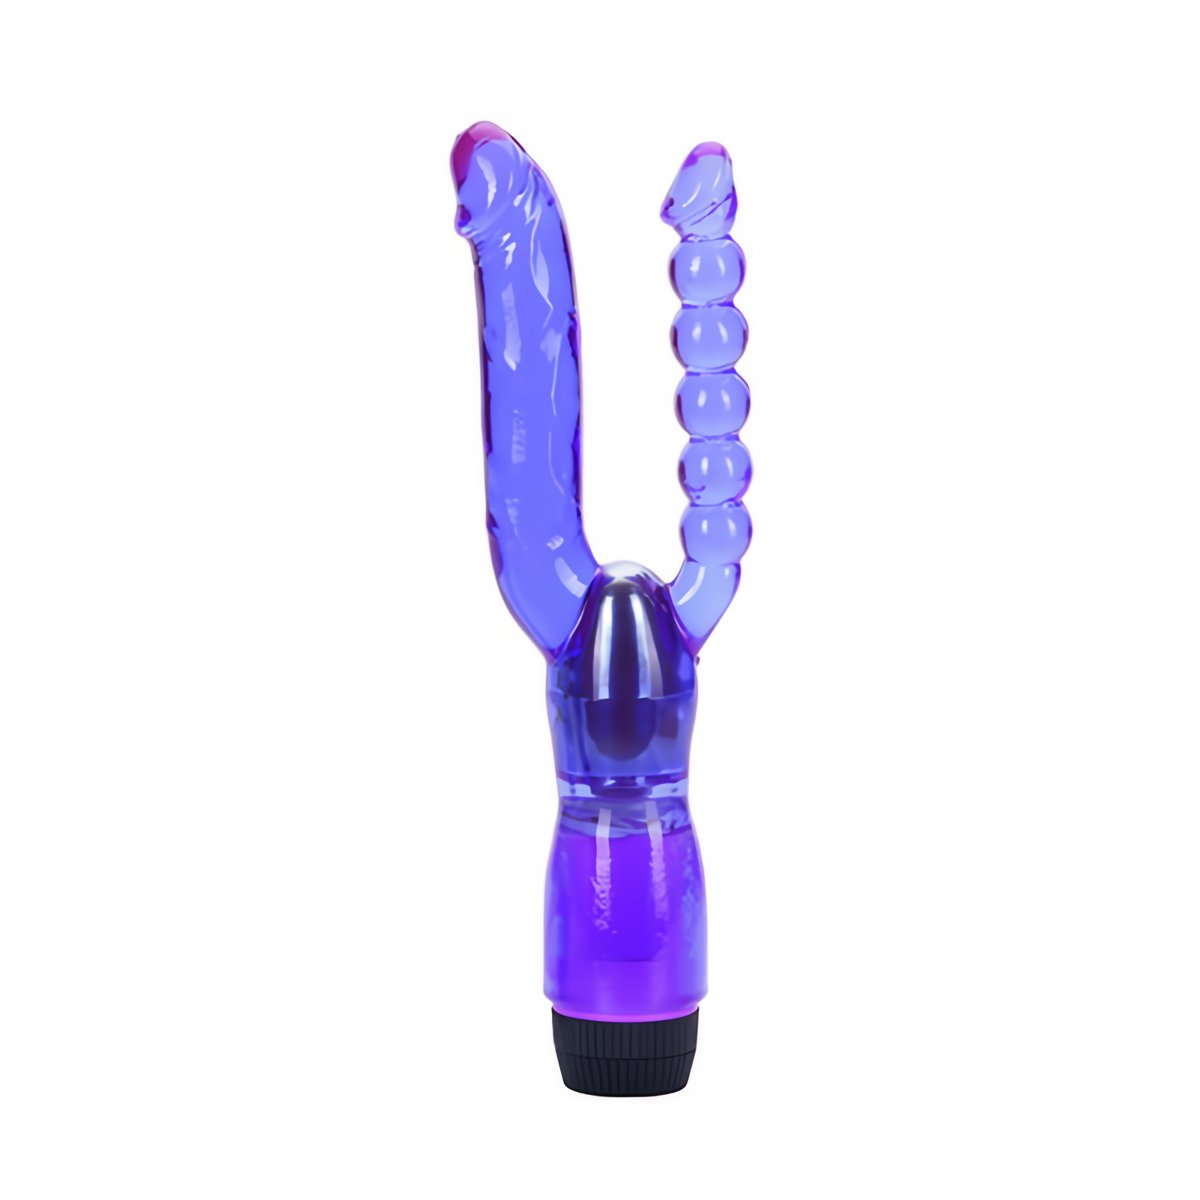 Double Penetrating Vibrator - EroticToyzProducten,Toys,Dildos,Dubbele Dildo's,,VrouwelijkSeven Creations